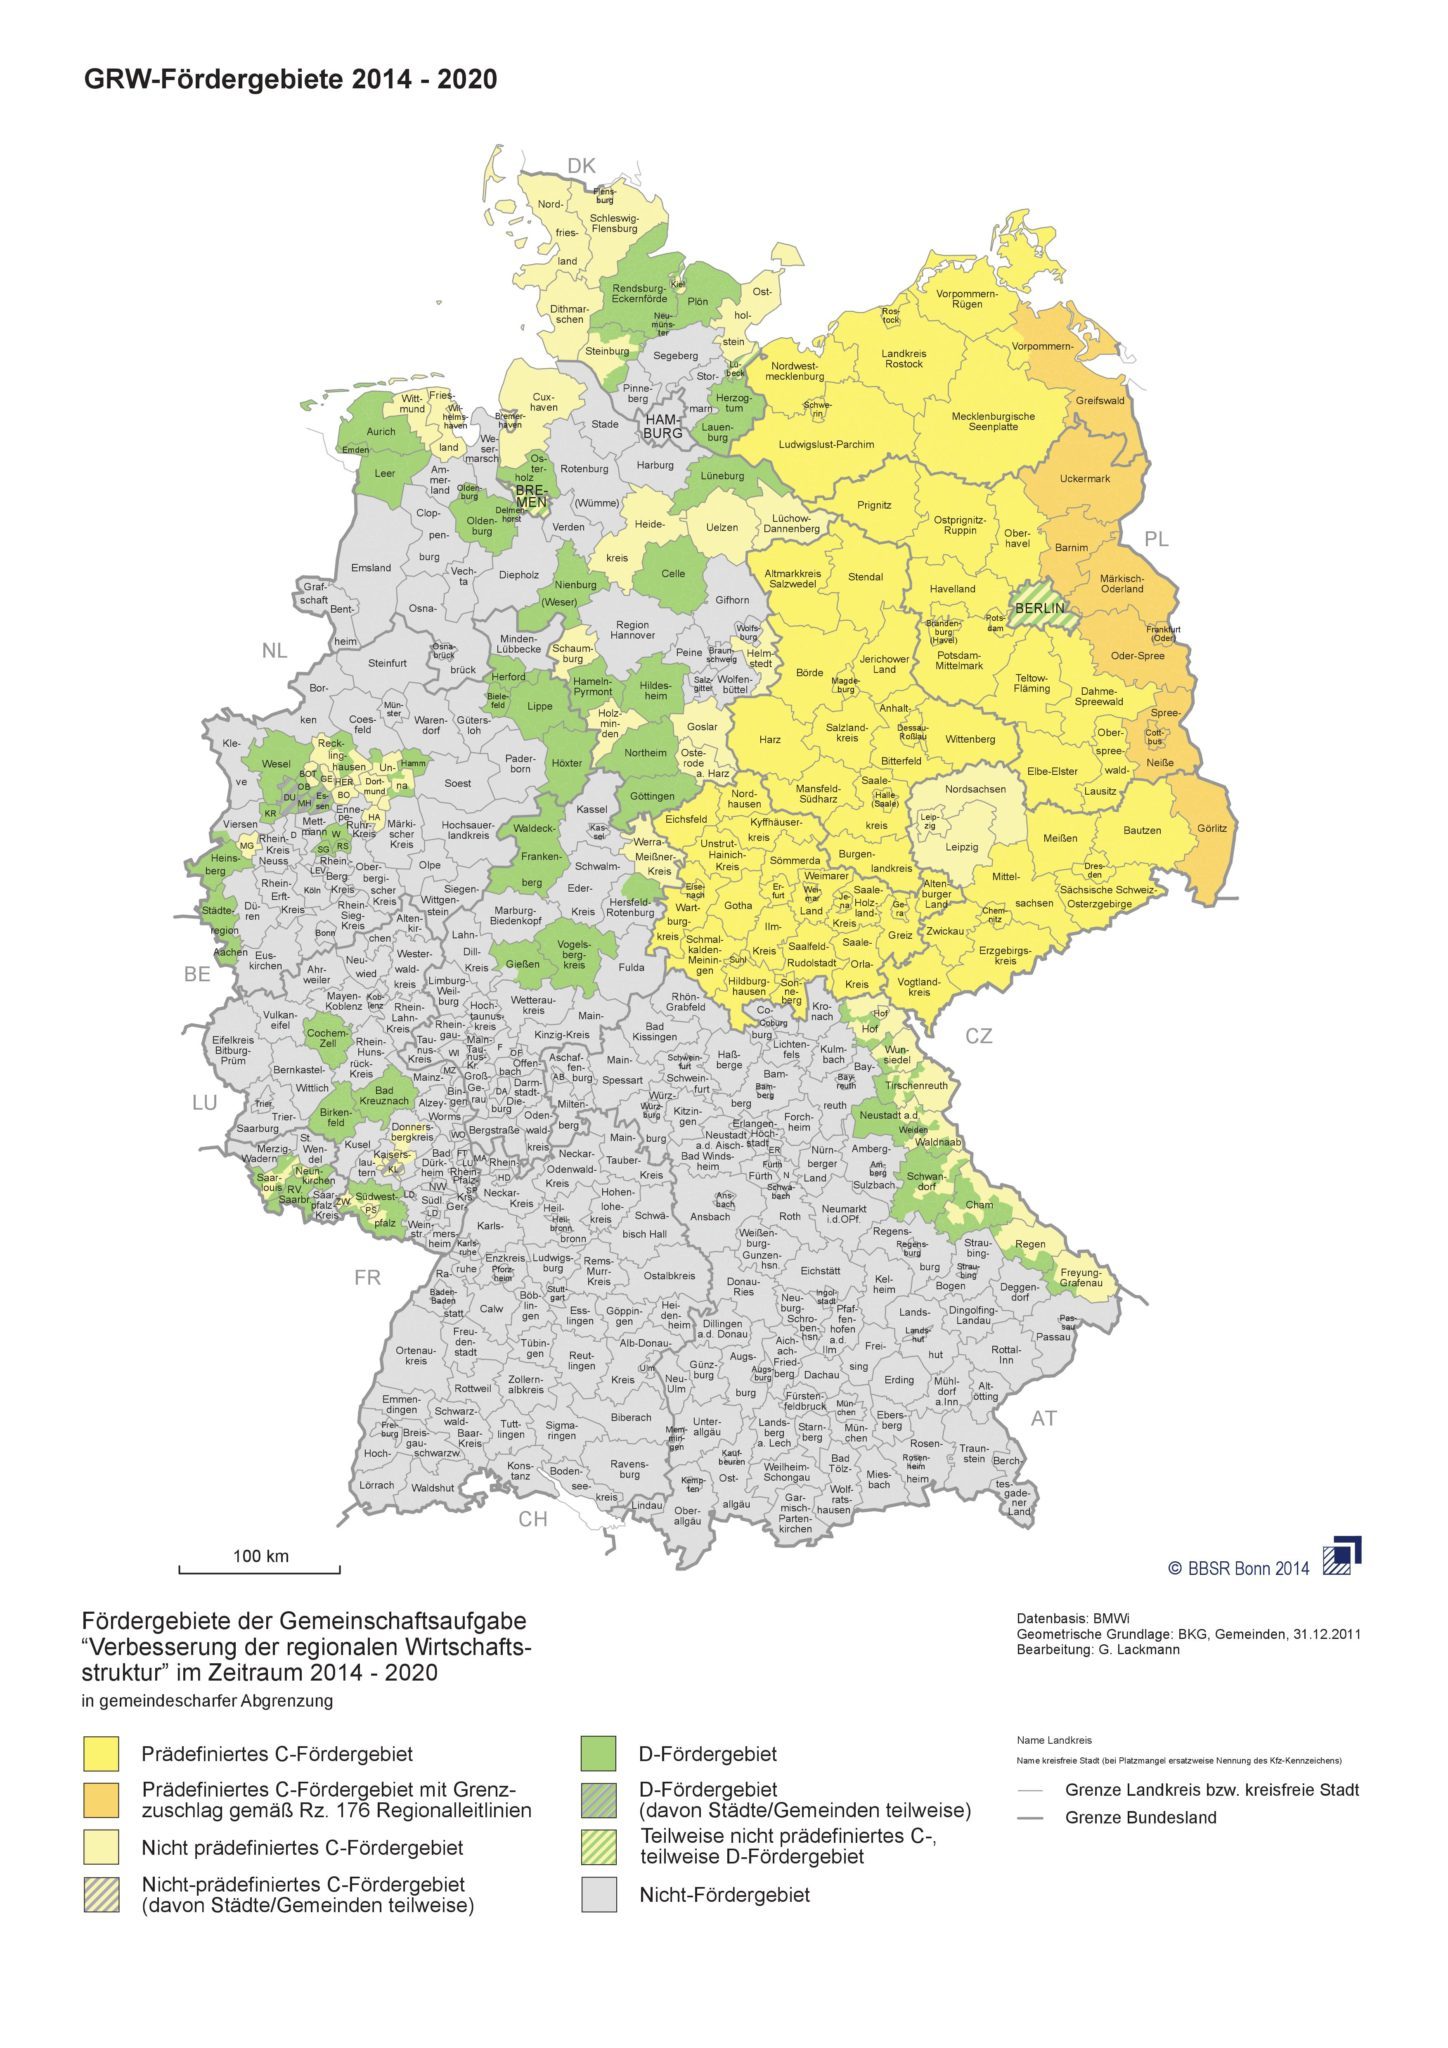 Fördergebietskarte BBSR Bonn 2014